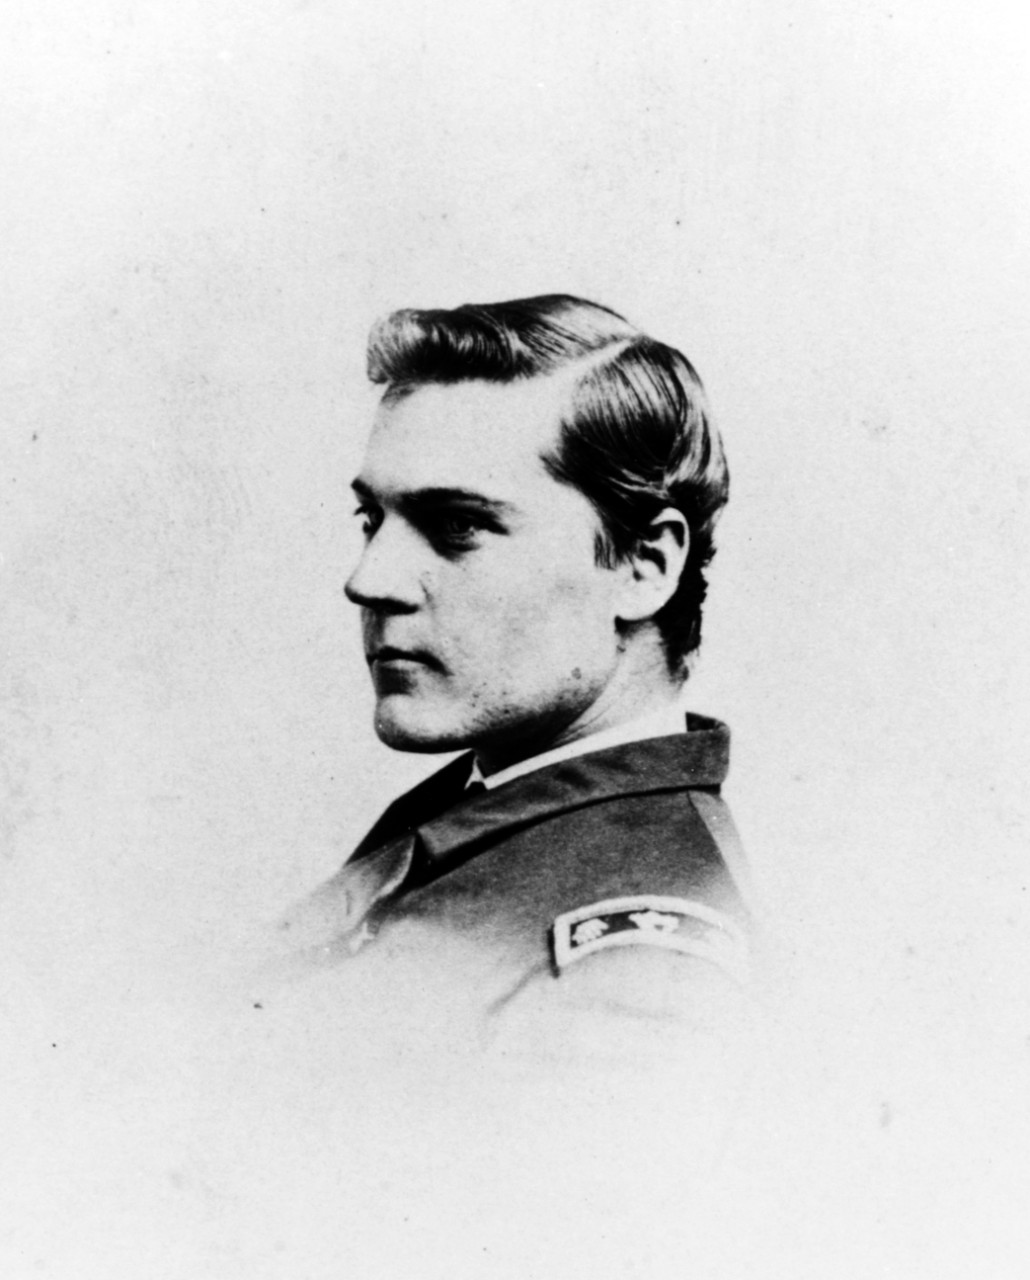 Acting Volunteer Lieutenant Commander Henry H. Gorringe, USN, 1865-1866. 